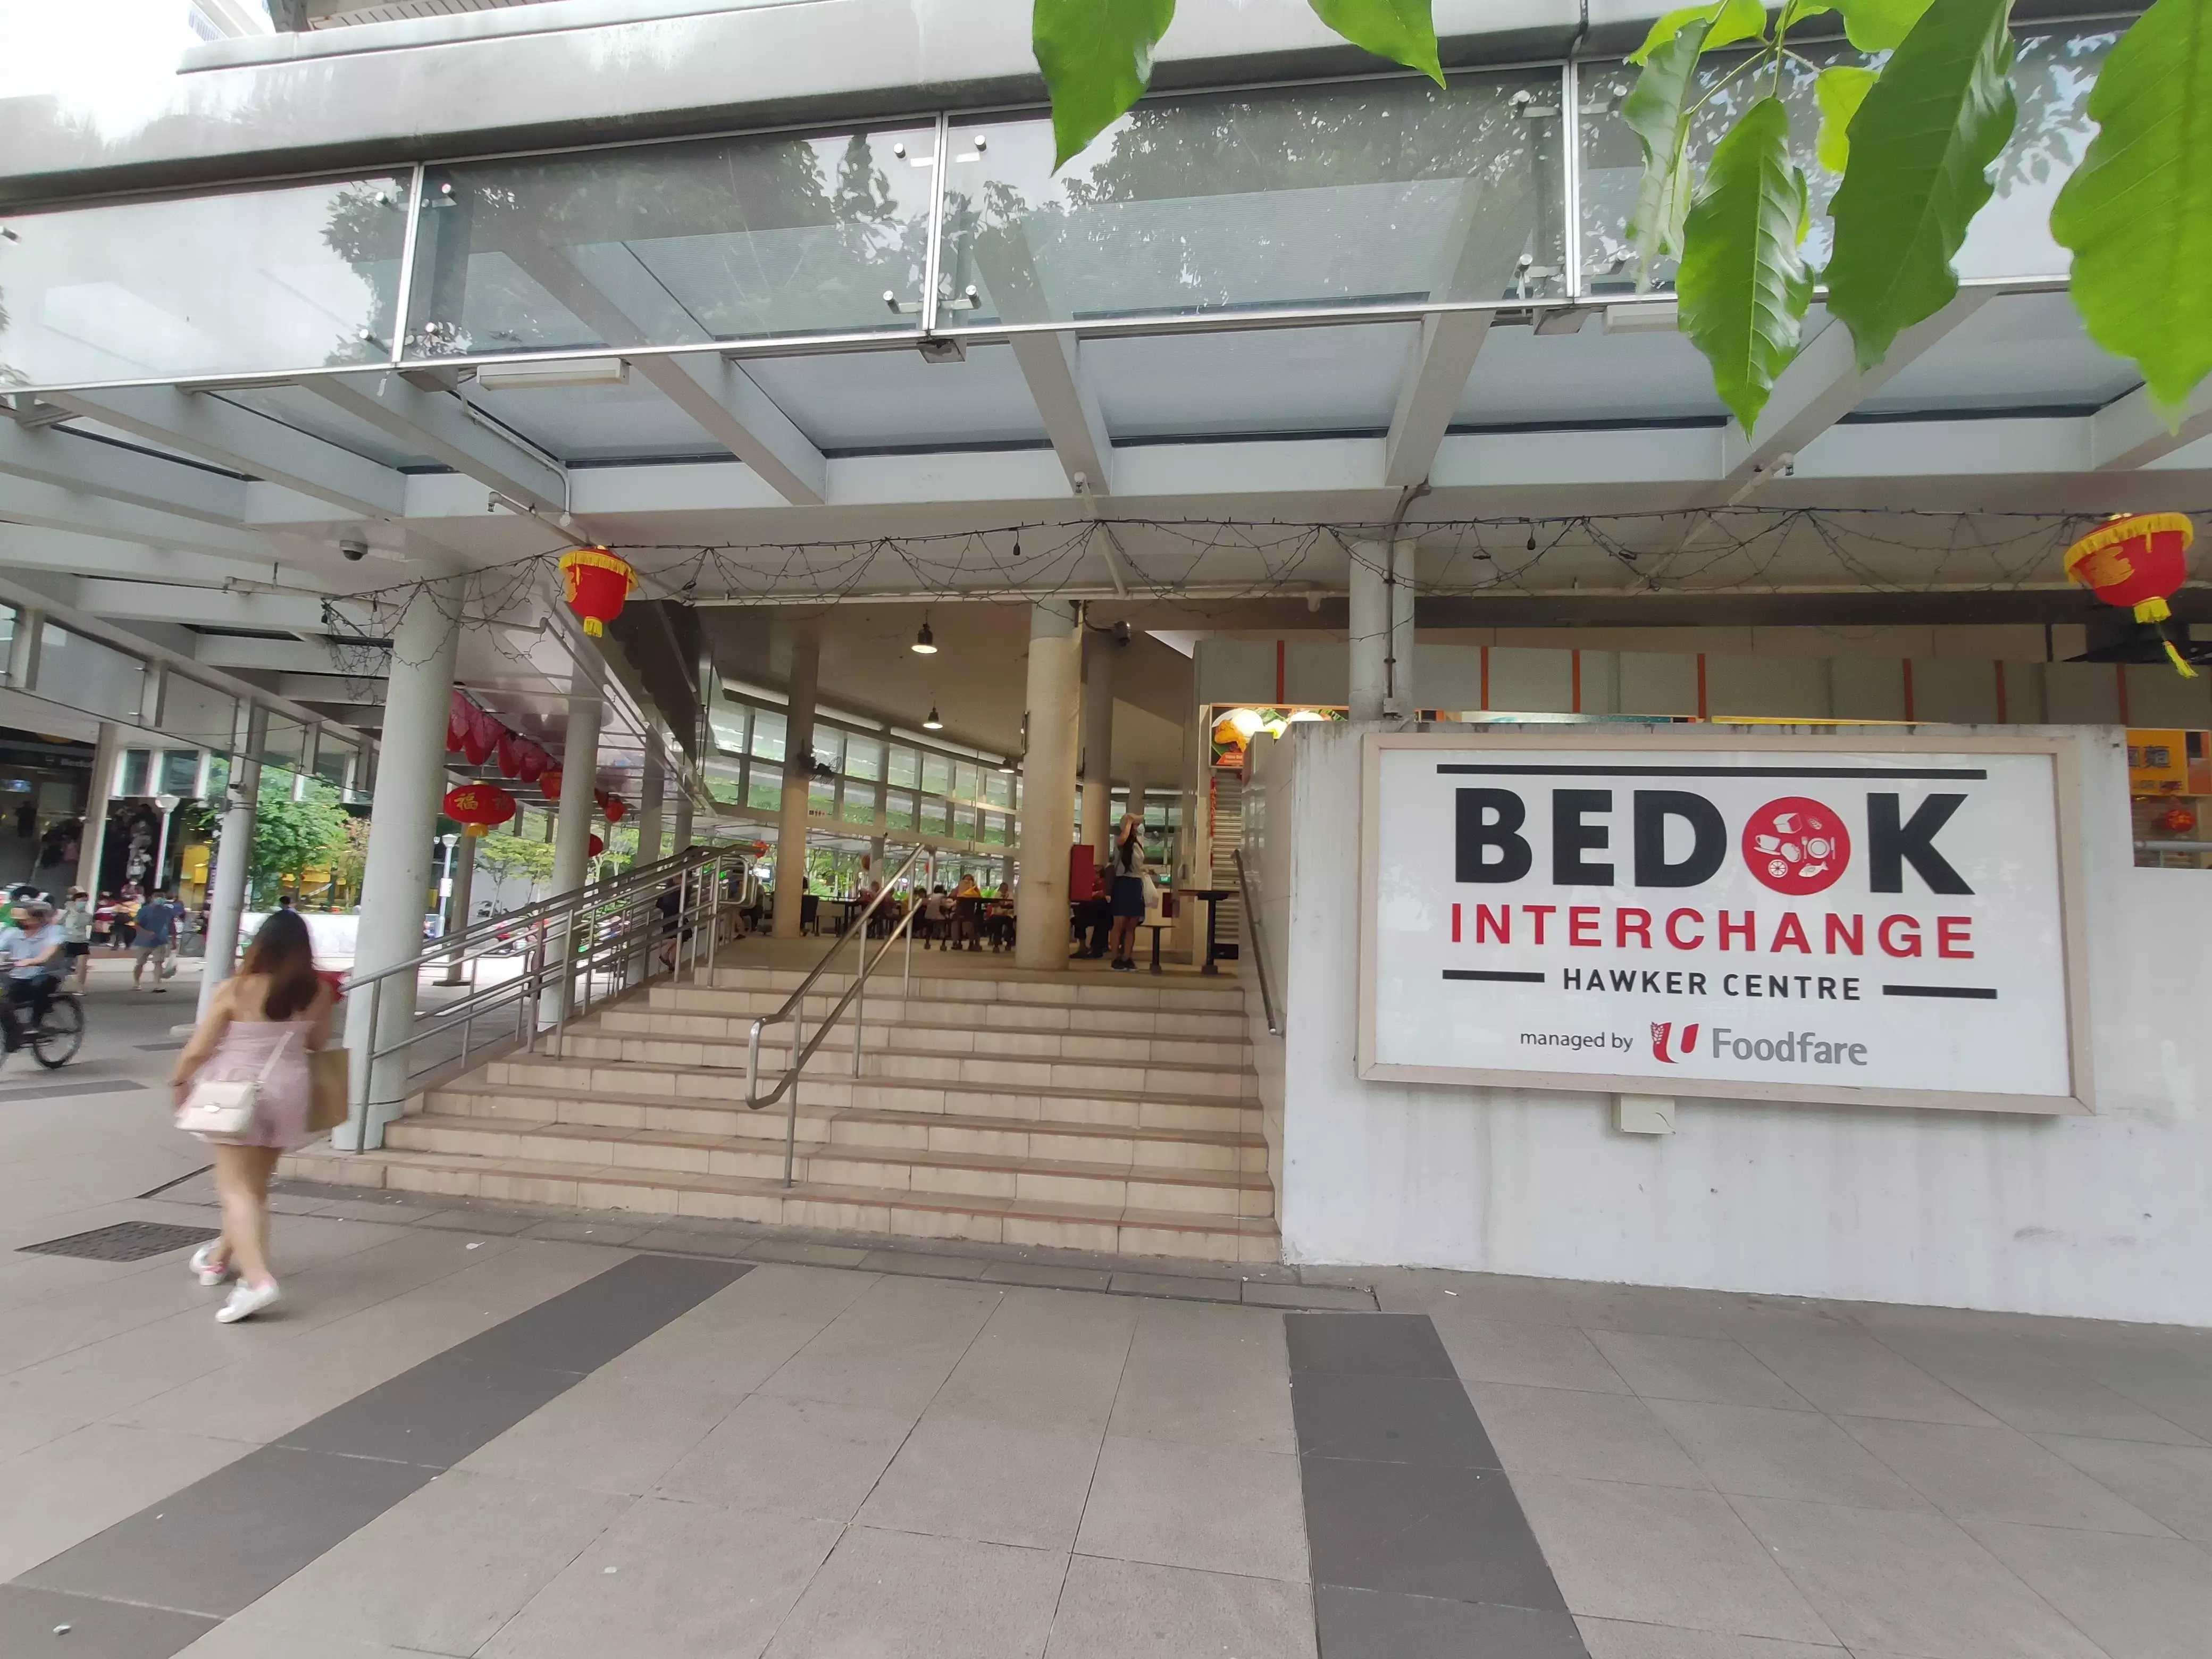 Guide: Bedok Interchange Hawker Centre (Singapore)